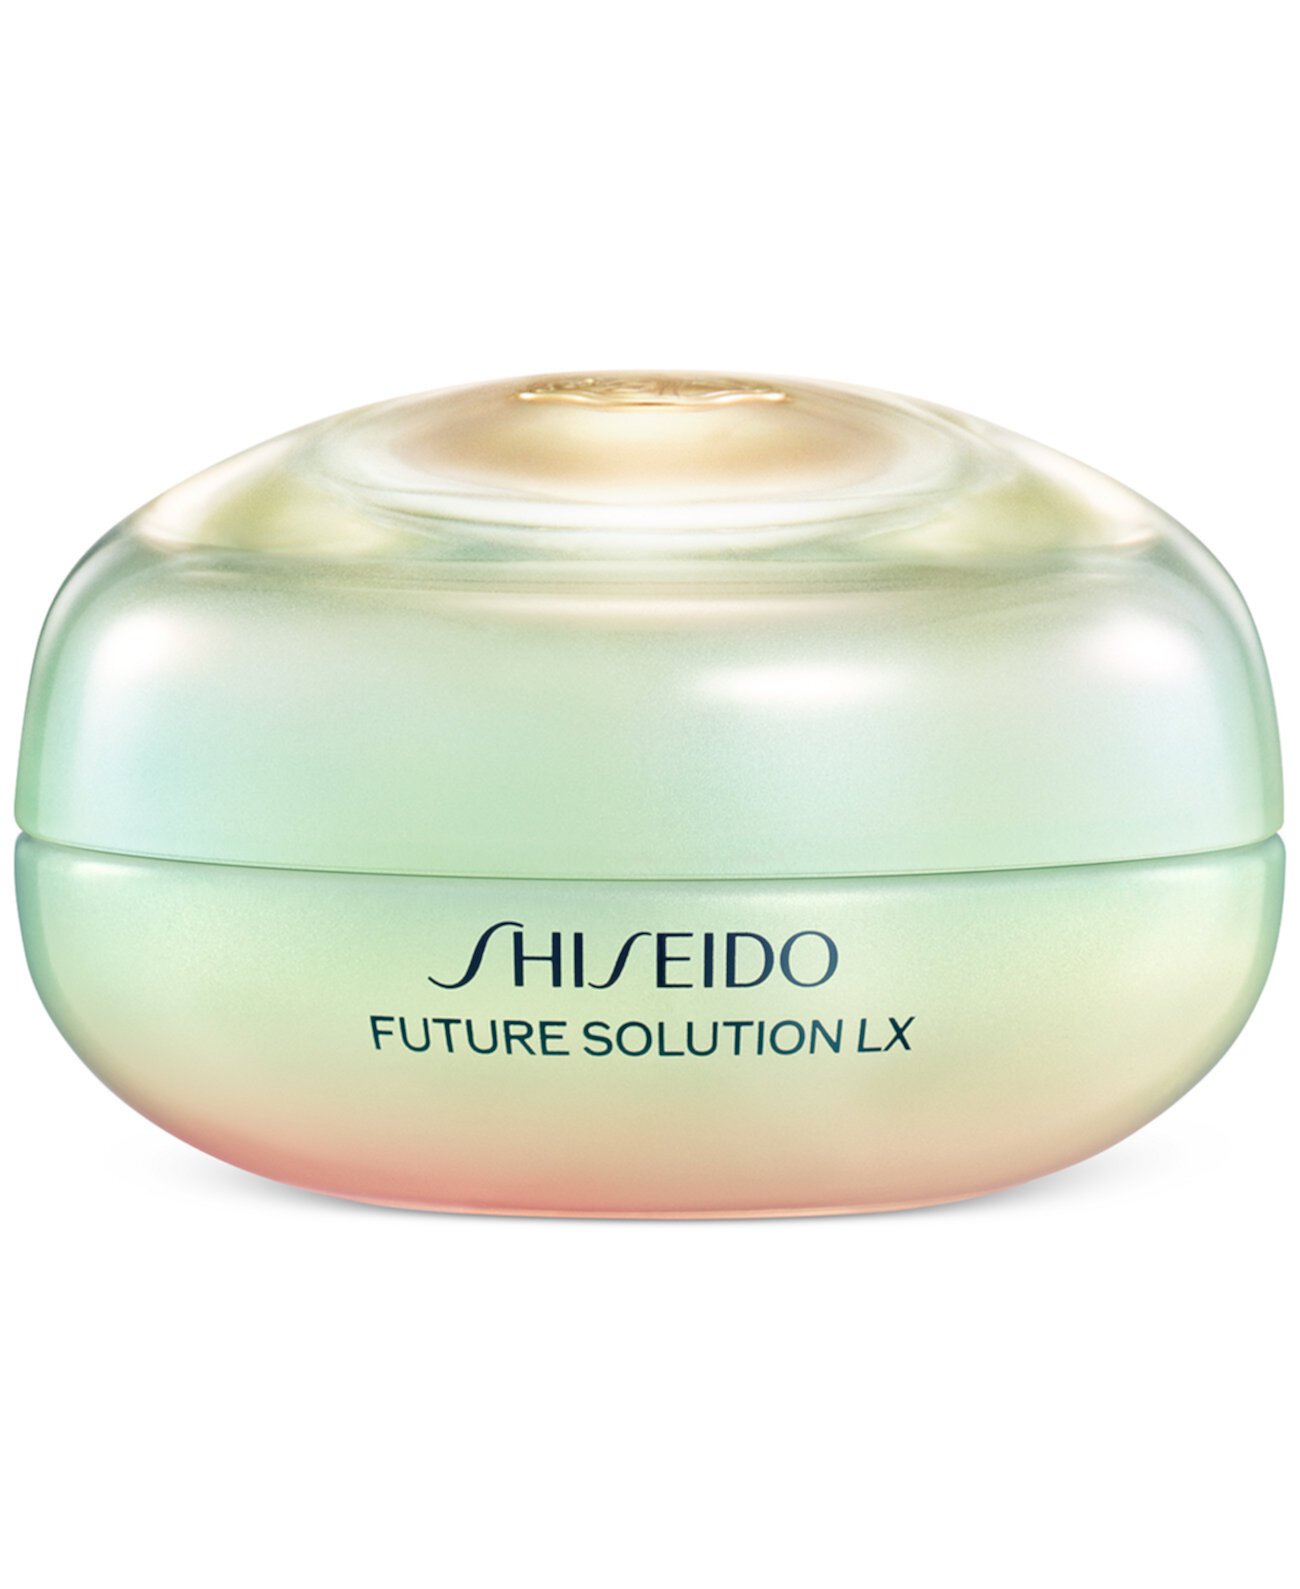 Shiseido solution. Shiseido Future solution LX. Shiseido Future solution. Shiseido обогащенная очищающая пенка Future solution LX отзывы.